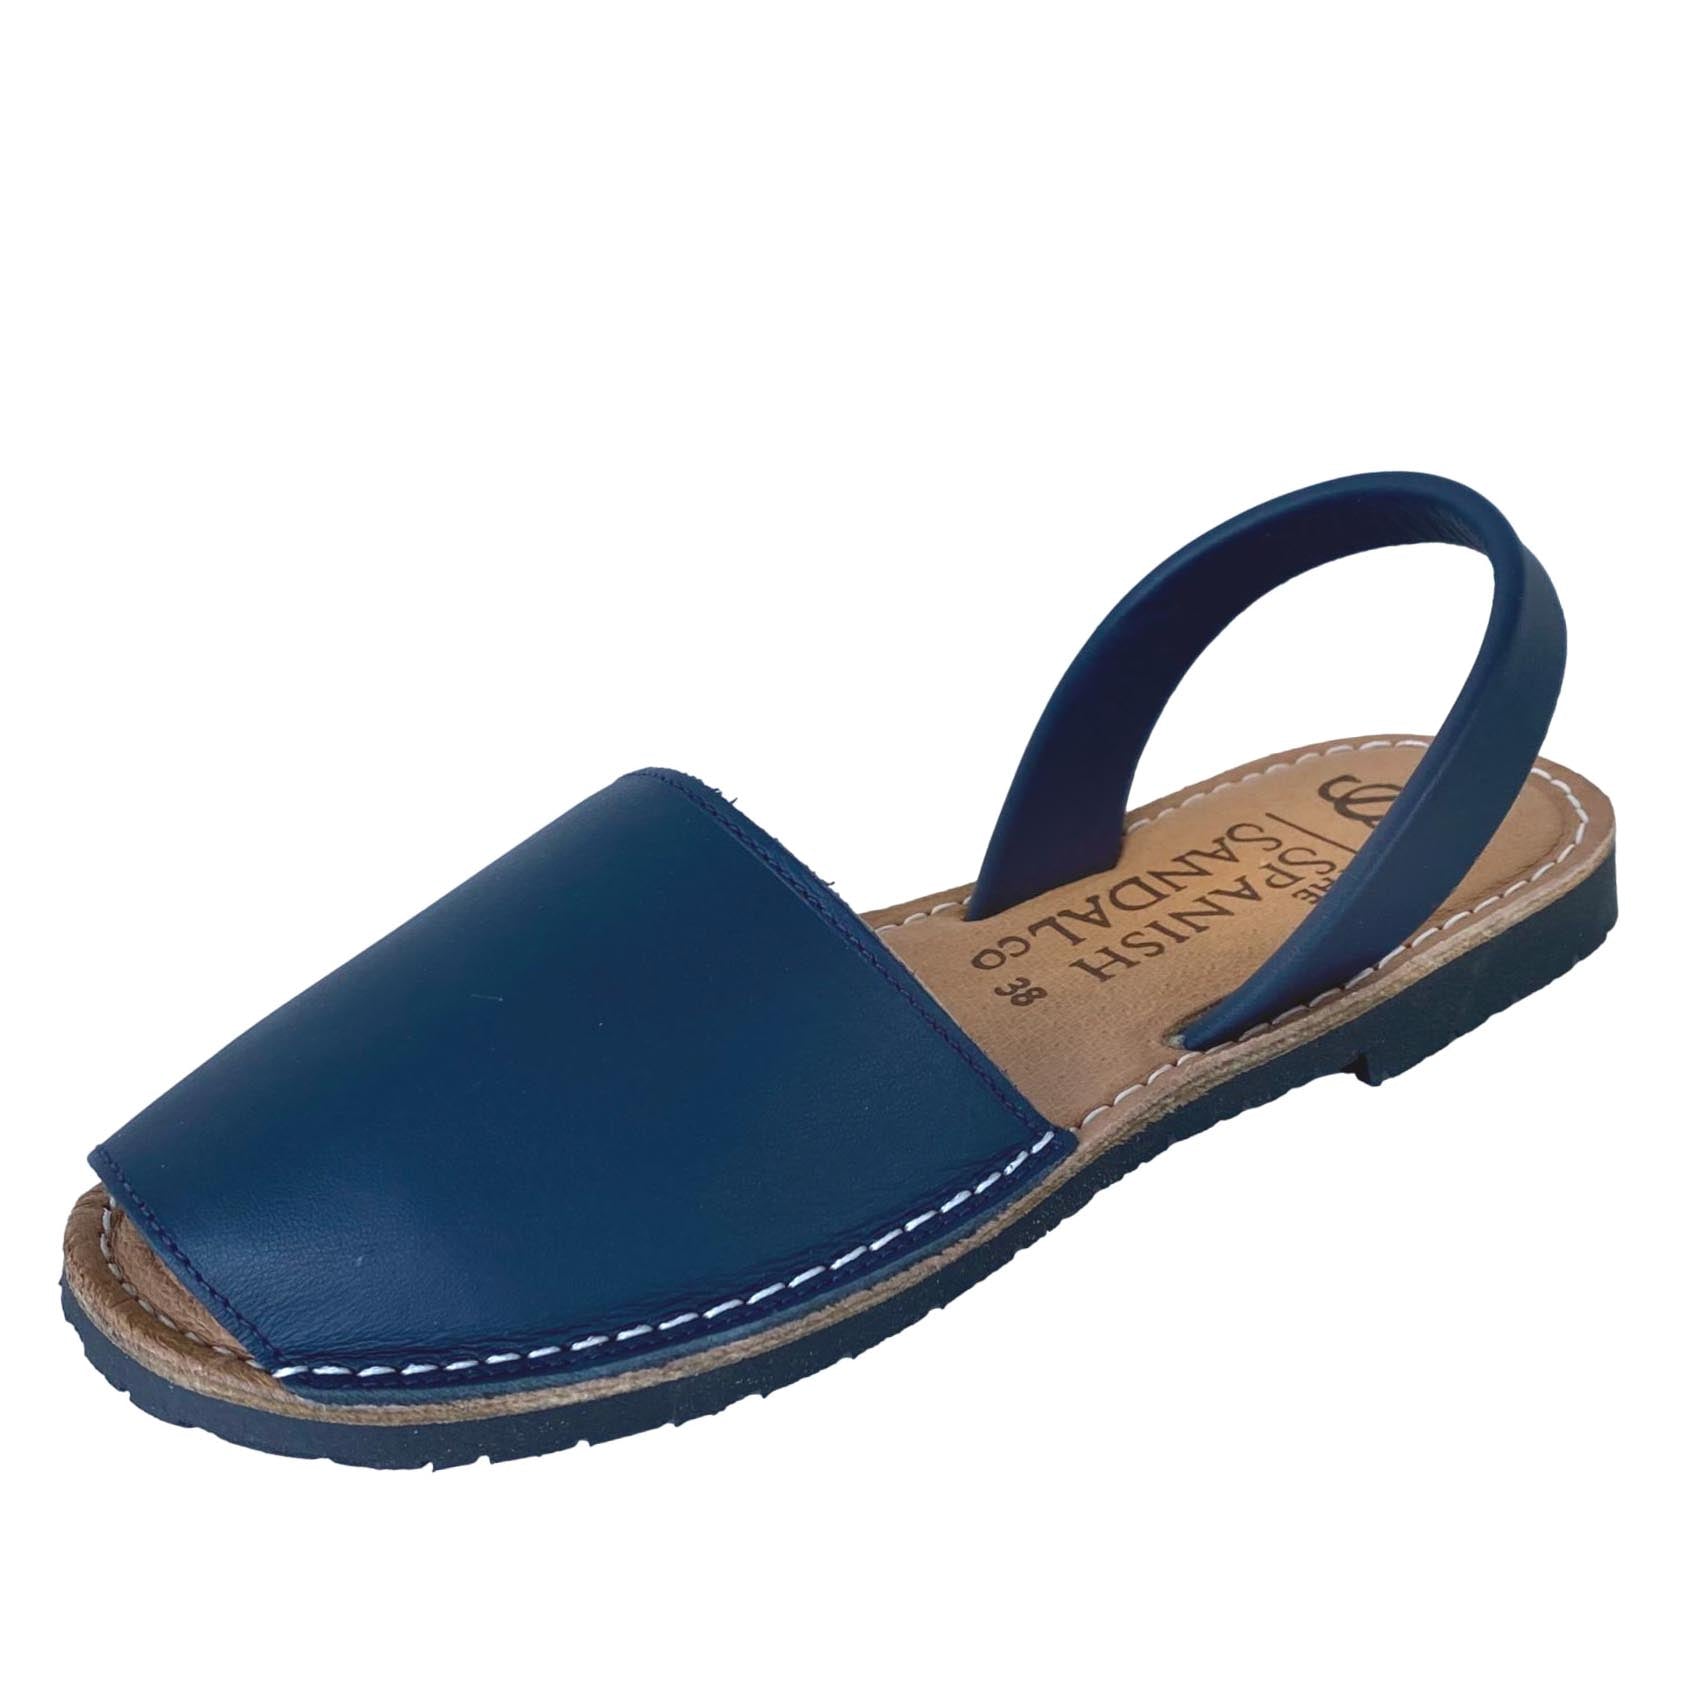 Classic Navy Blue sandals